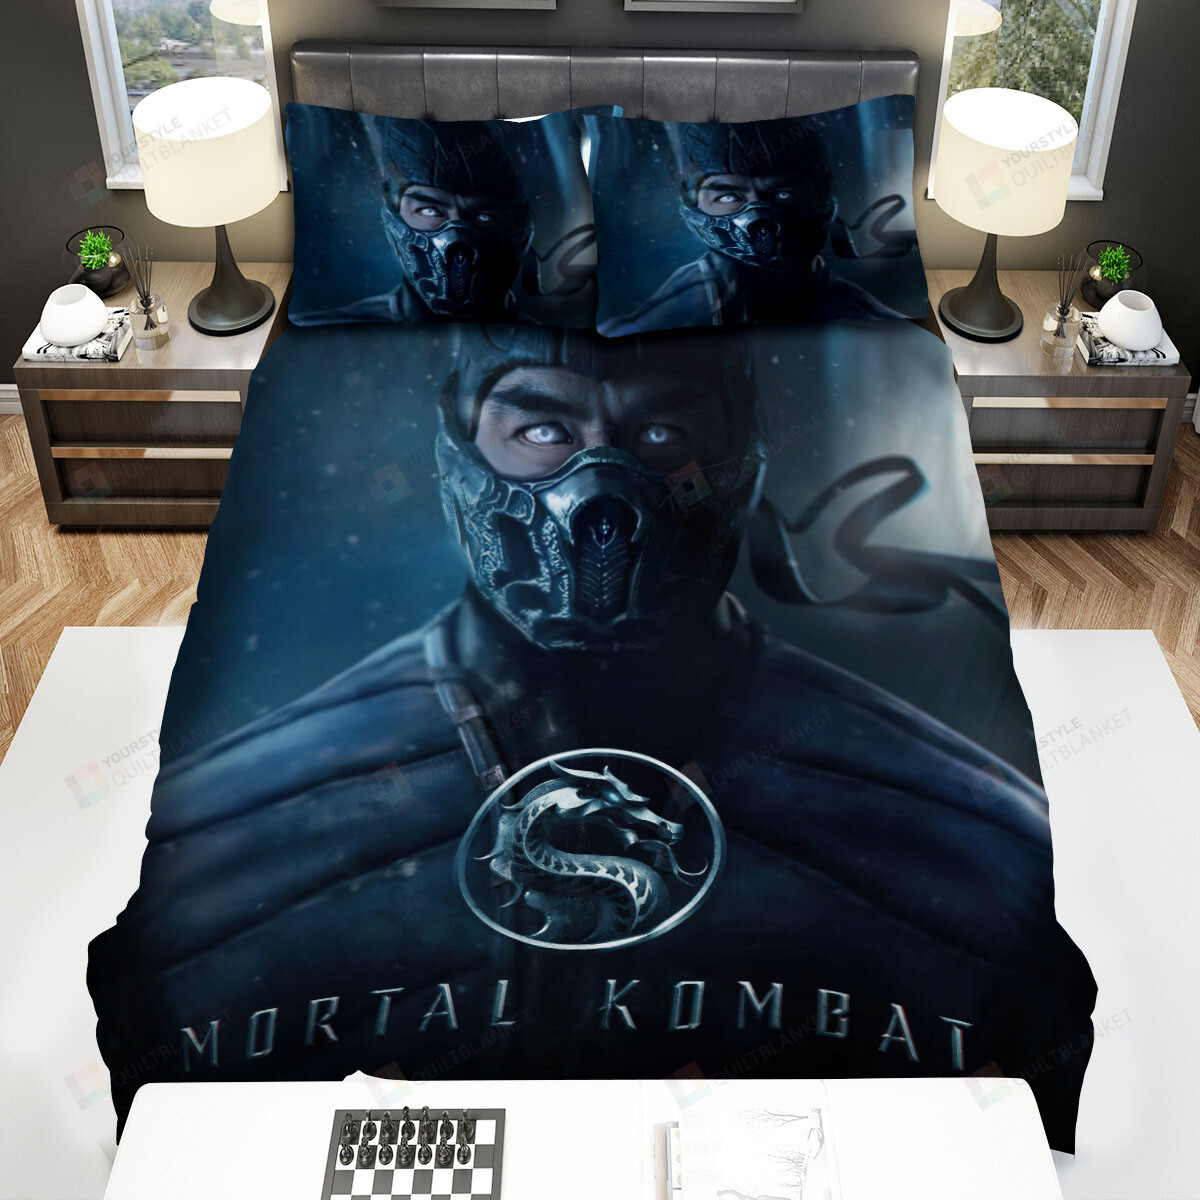 Mortal Kombat (2021) Movie Sub Zero Illustration Bed Sheets Spread Comforter Duvet Cover Bedding Sets